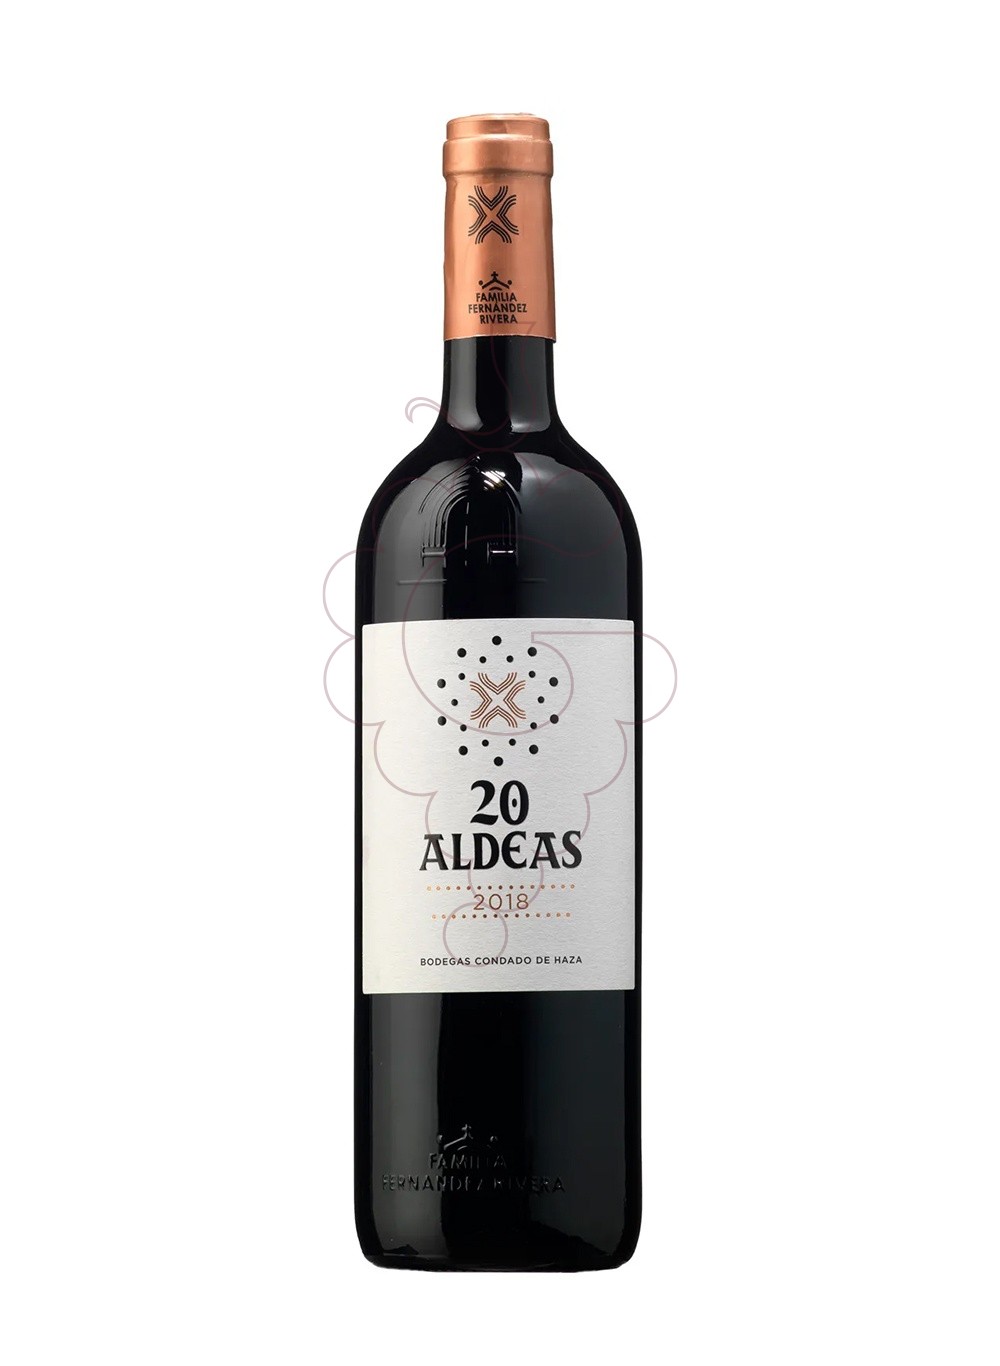 Photo 20 aldeas 2018 75 cl red wine